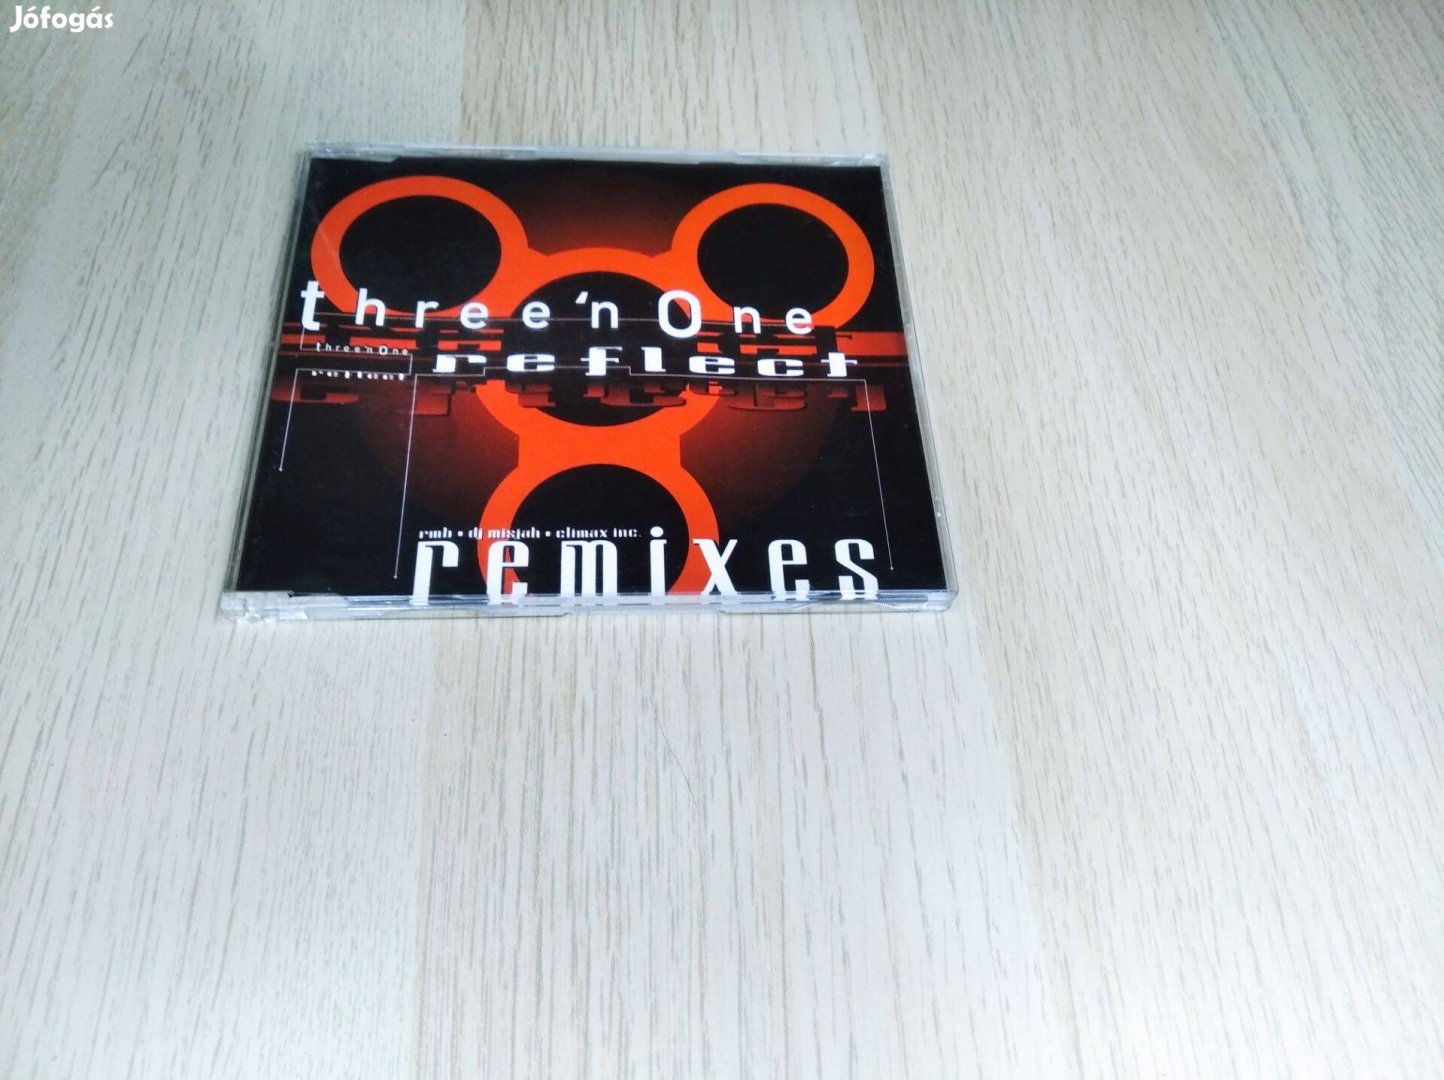 Three 'N One - Reflect (Remixes) Maxi CD 1997